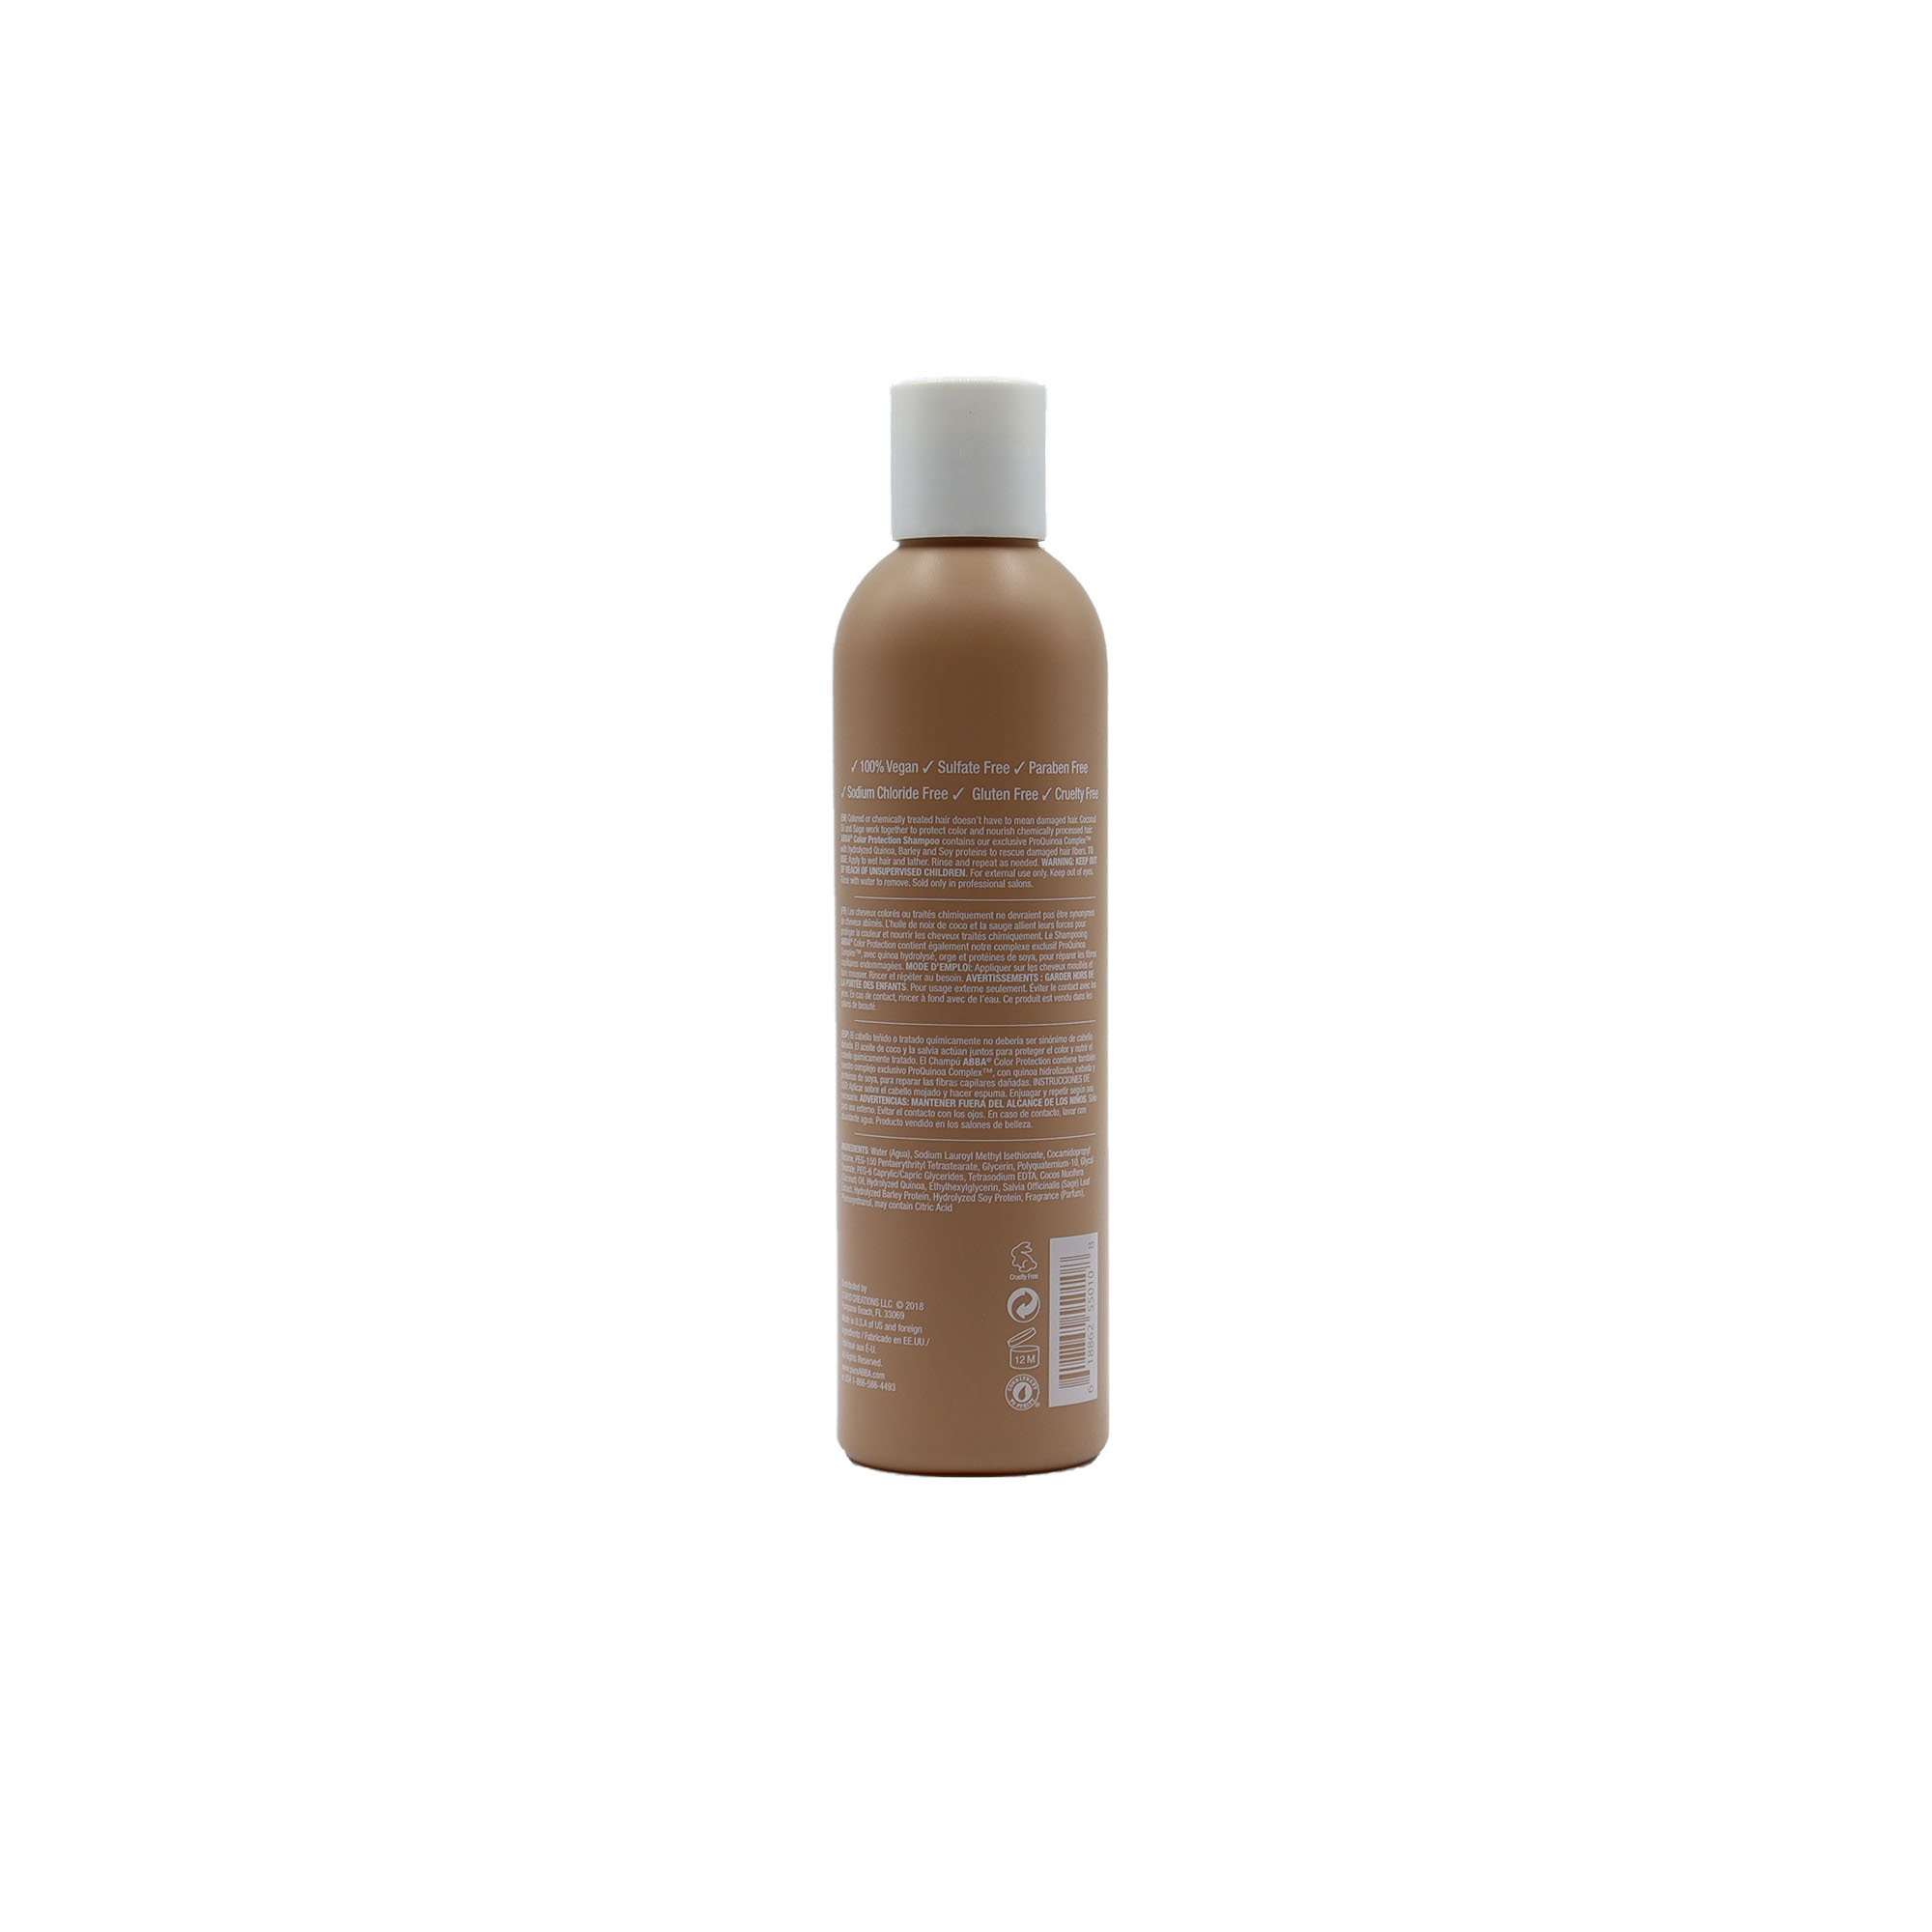 Abba Color Protection Shampoo 8 oz / 236 ml - image 2 of 3